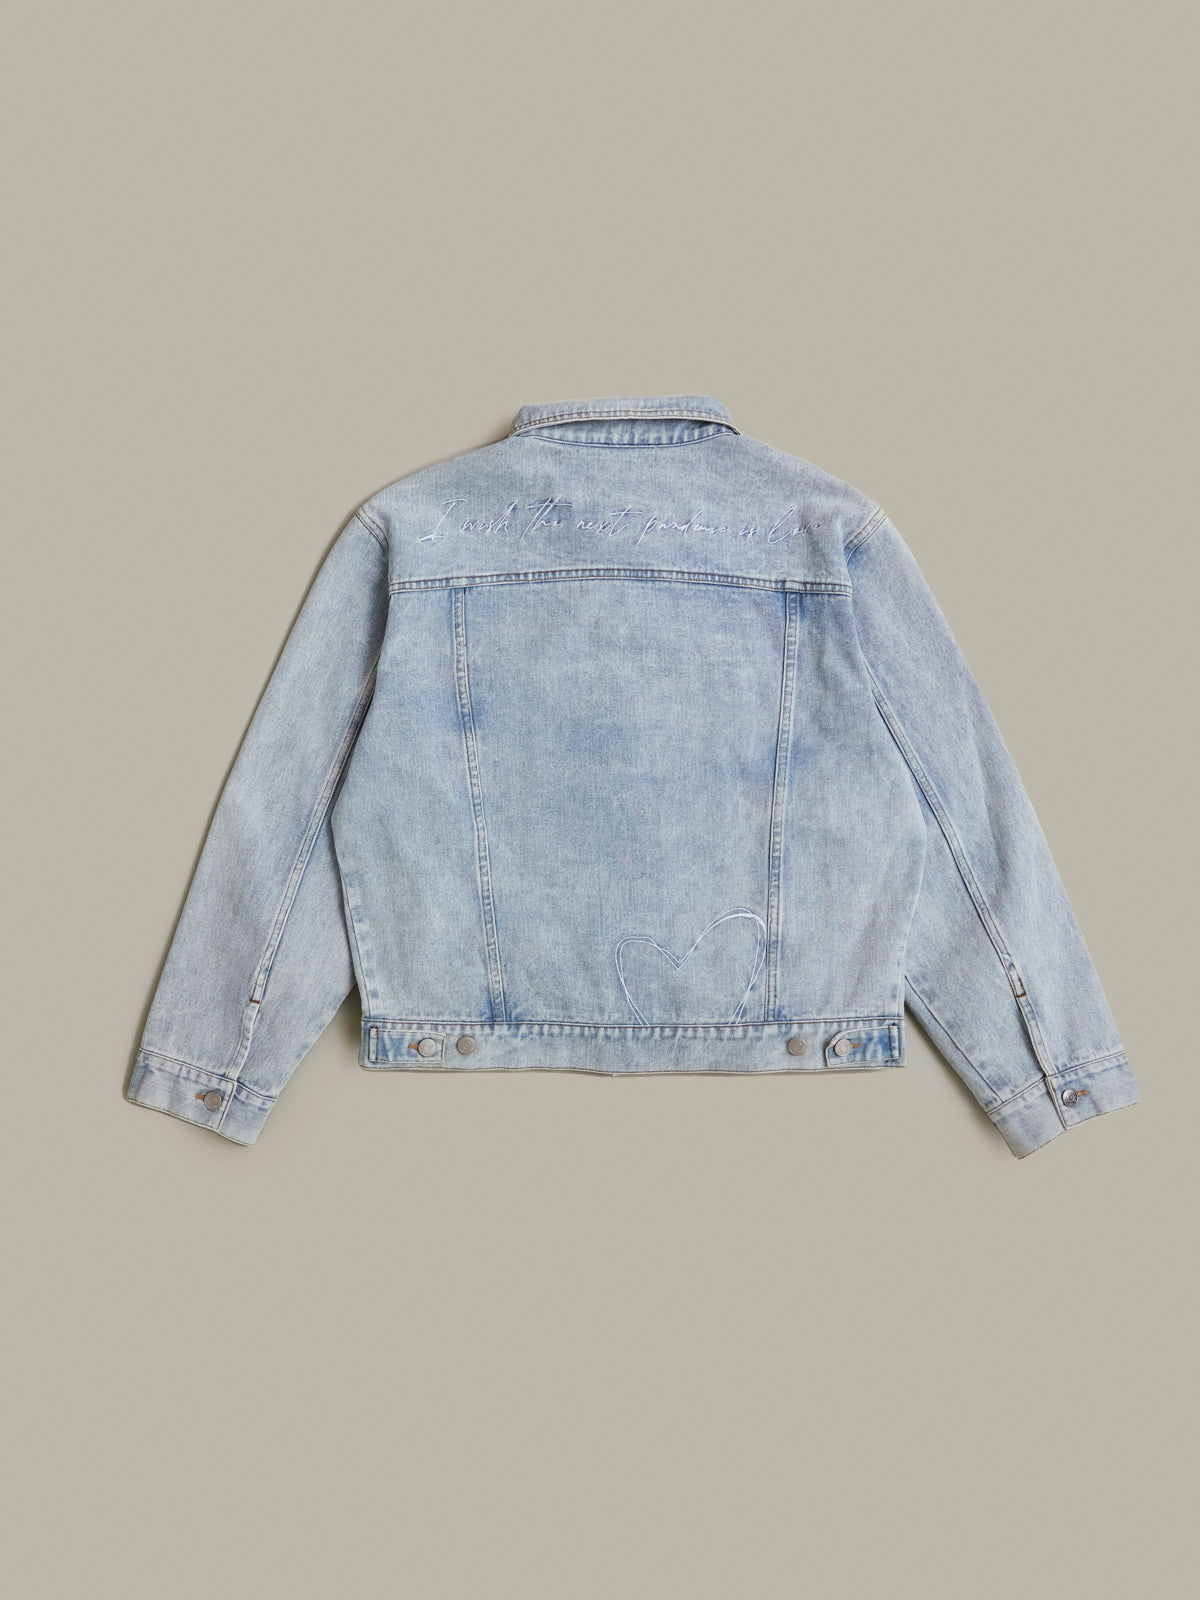 Alaska Blue Jeans jacket/ LMTD edition